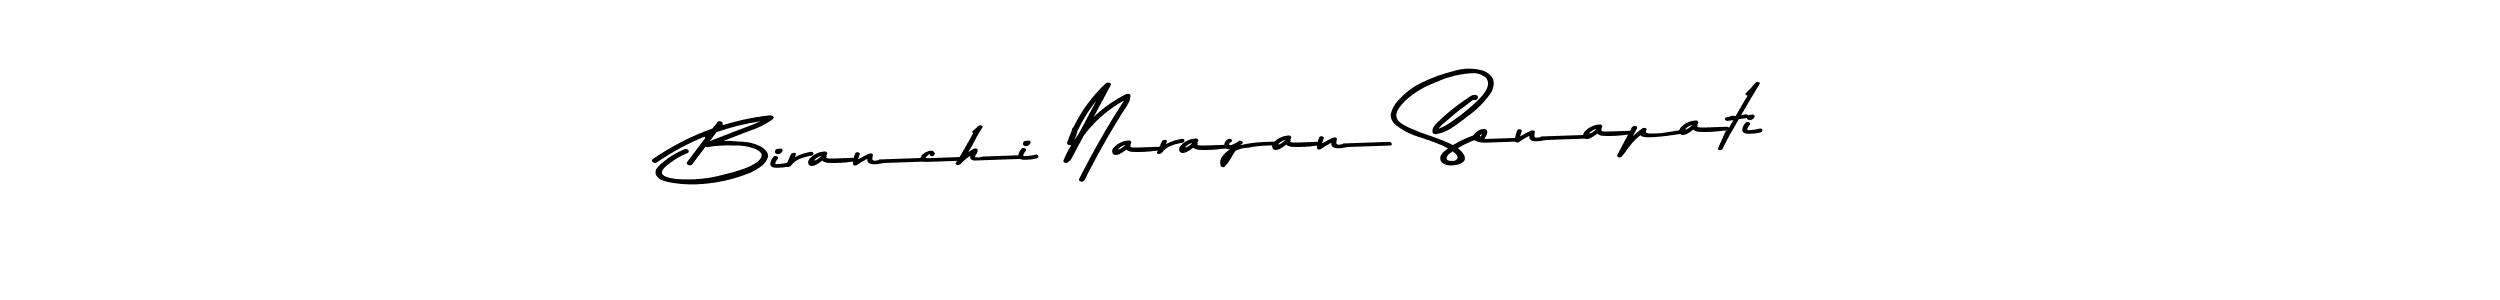 How to make Biranchi Narayan Senapati signature? Asem Kandis PERSONAL USE is a professional autograph style. Create handwritten signature for Biranchi Narayan Senapati name. Biranchi Narayan Senapati signature style 9 images and pictures png